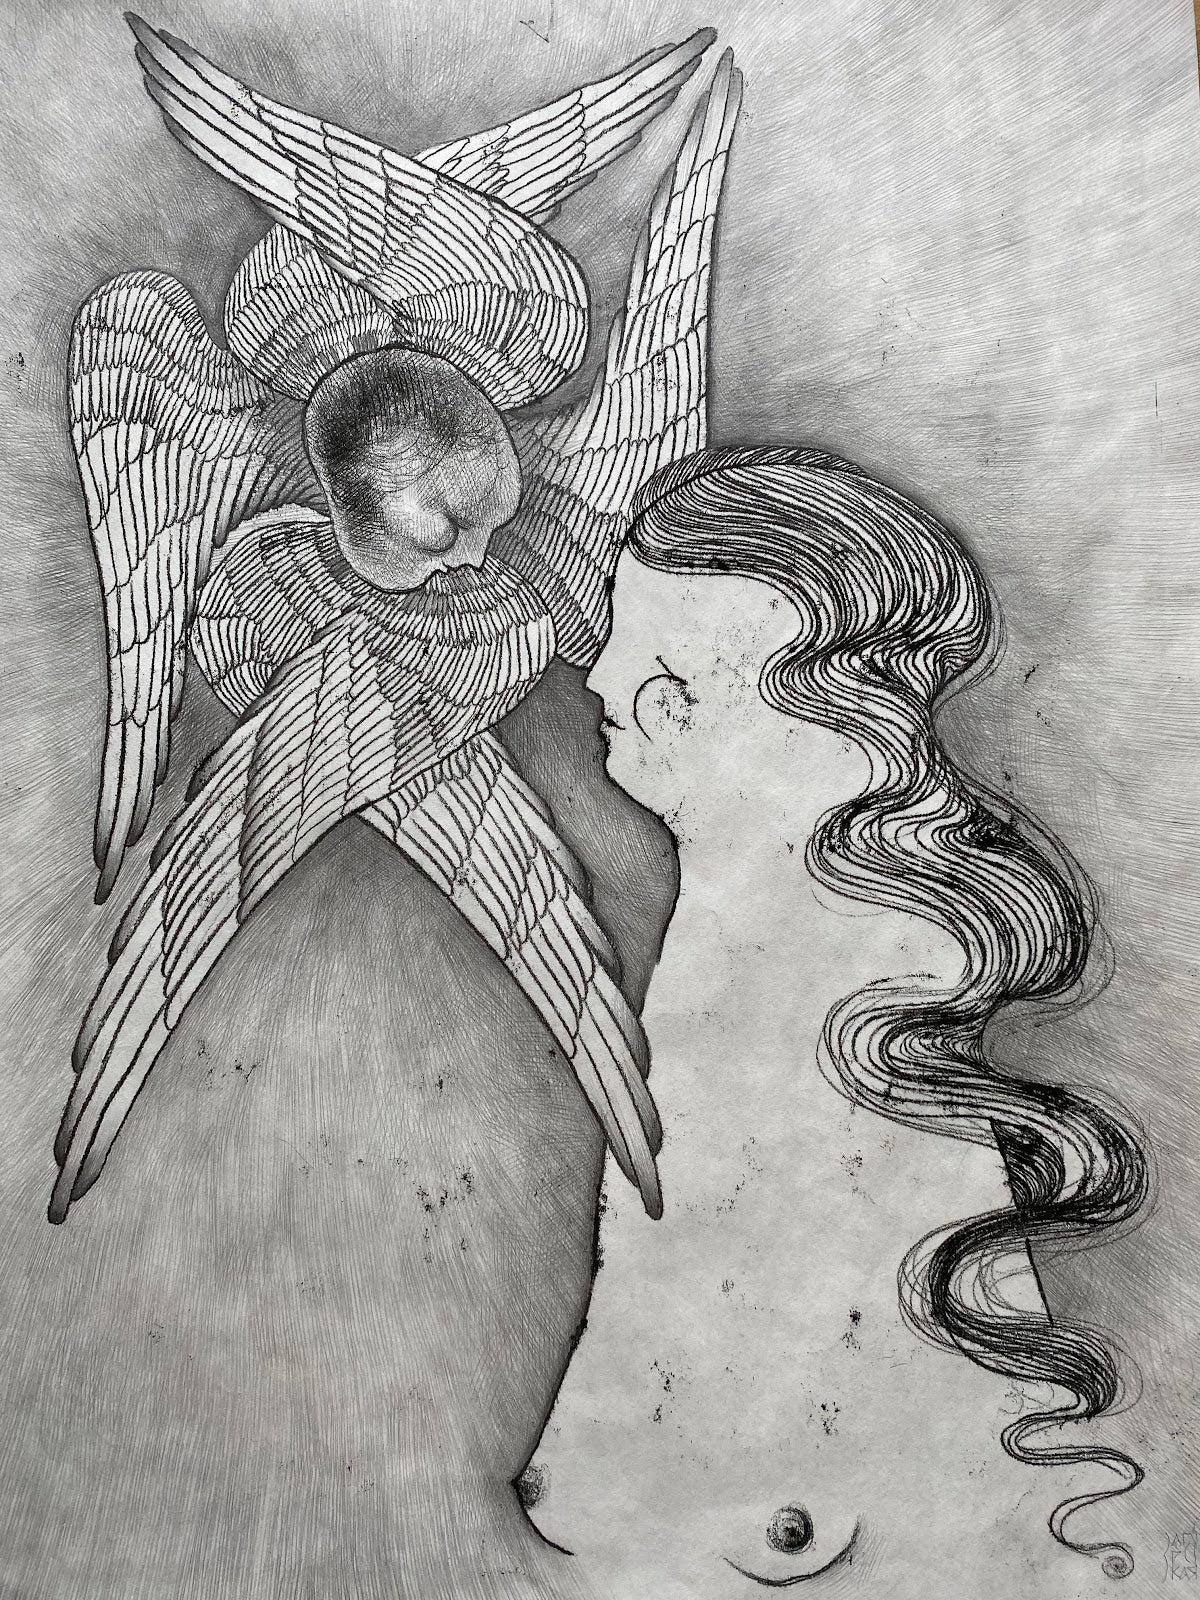 Maria Zagurska - Original work, monotype 50 x 65 cm - "The Seraphim"